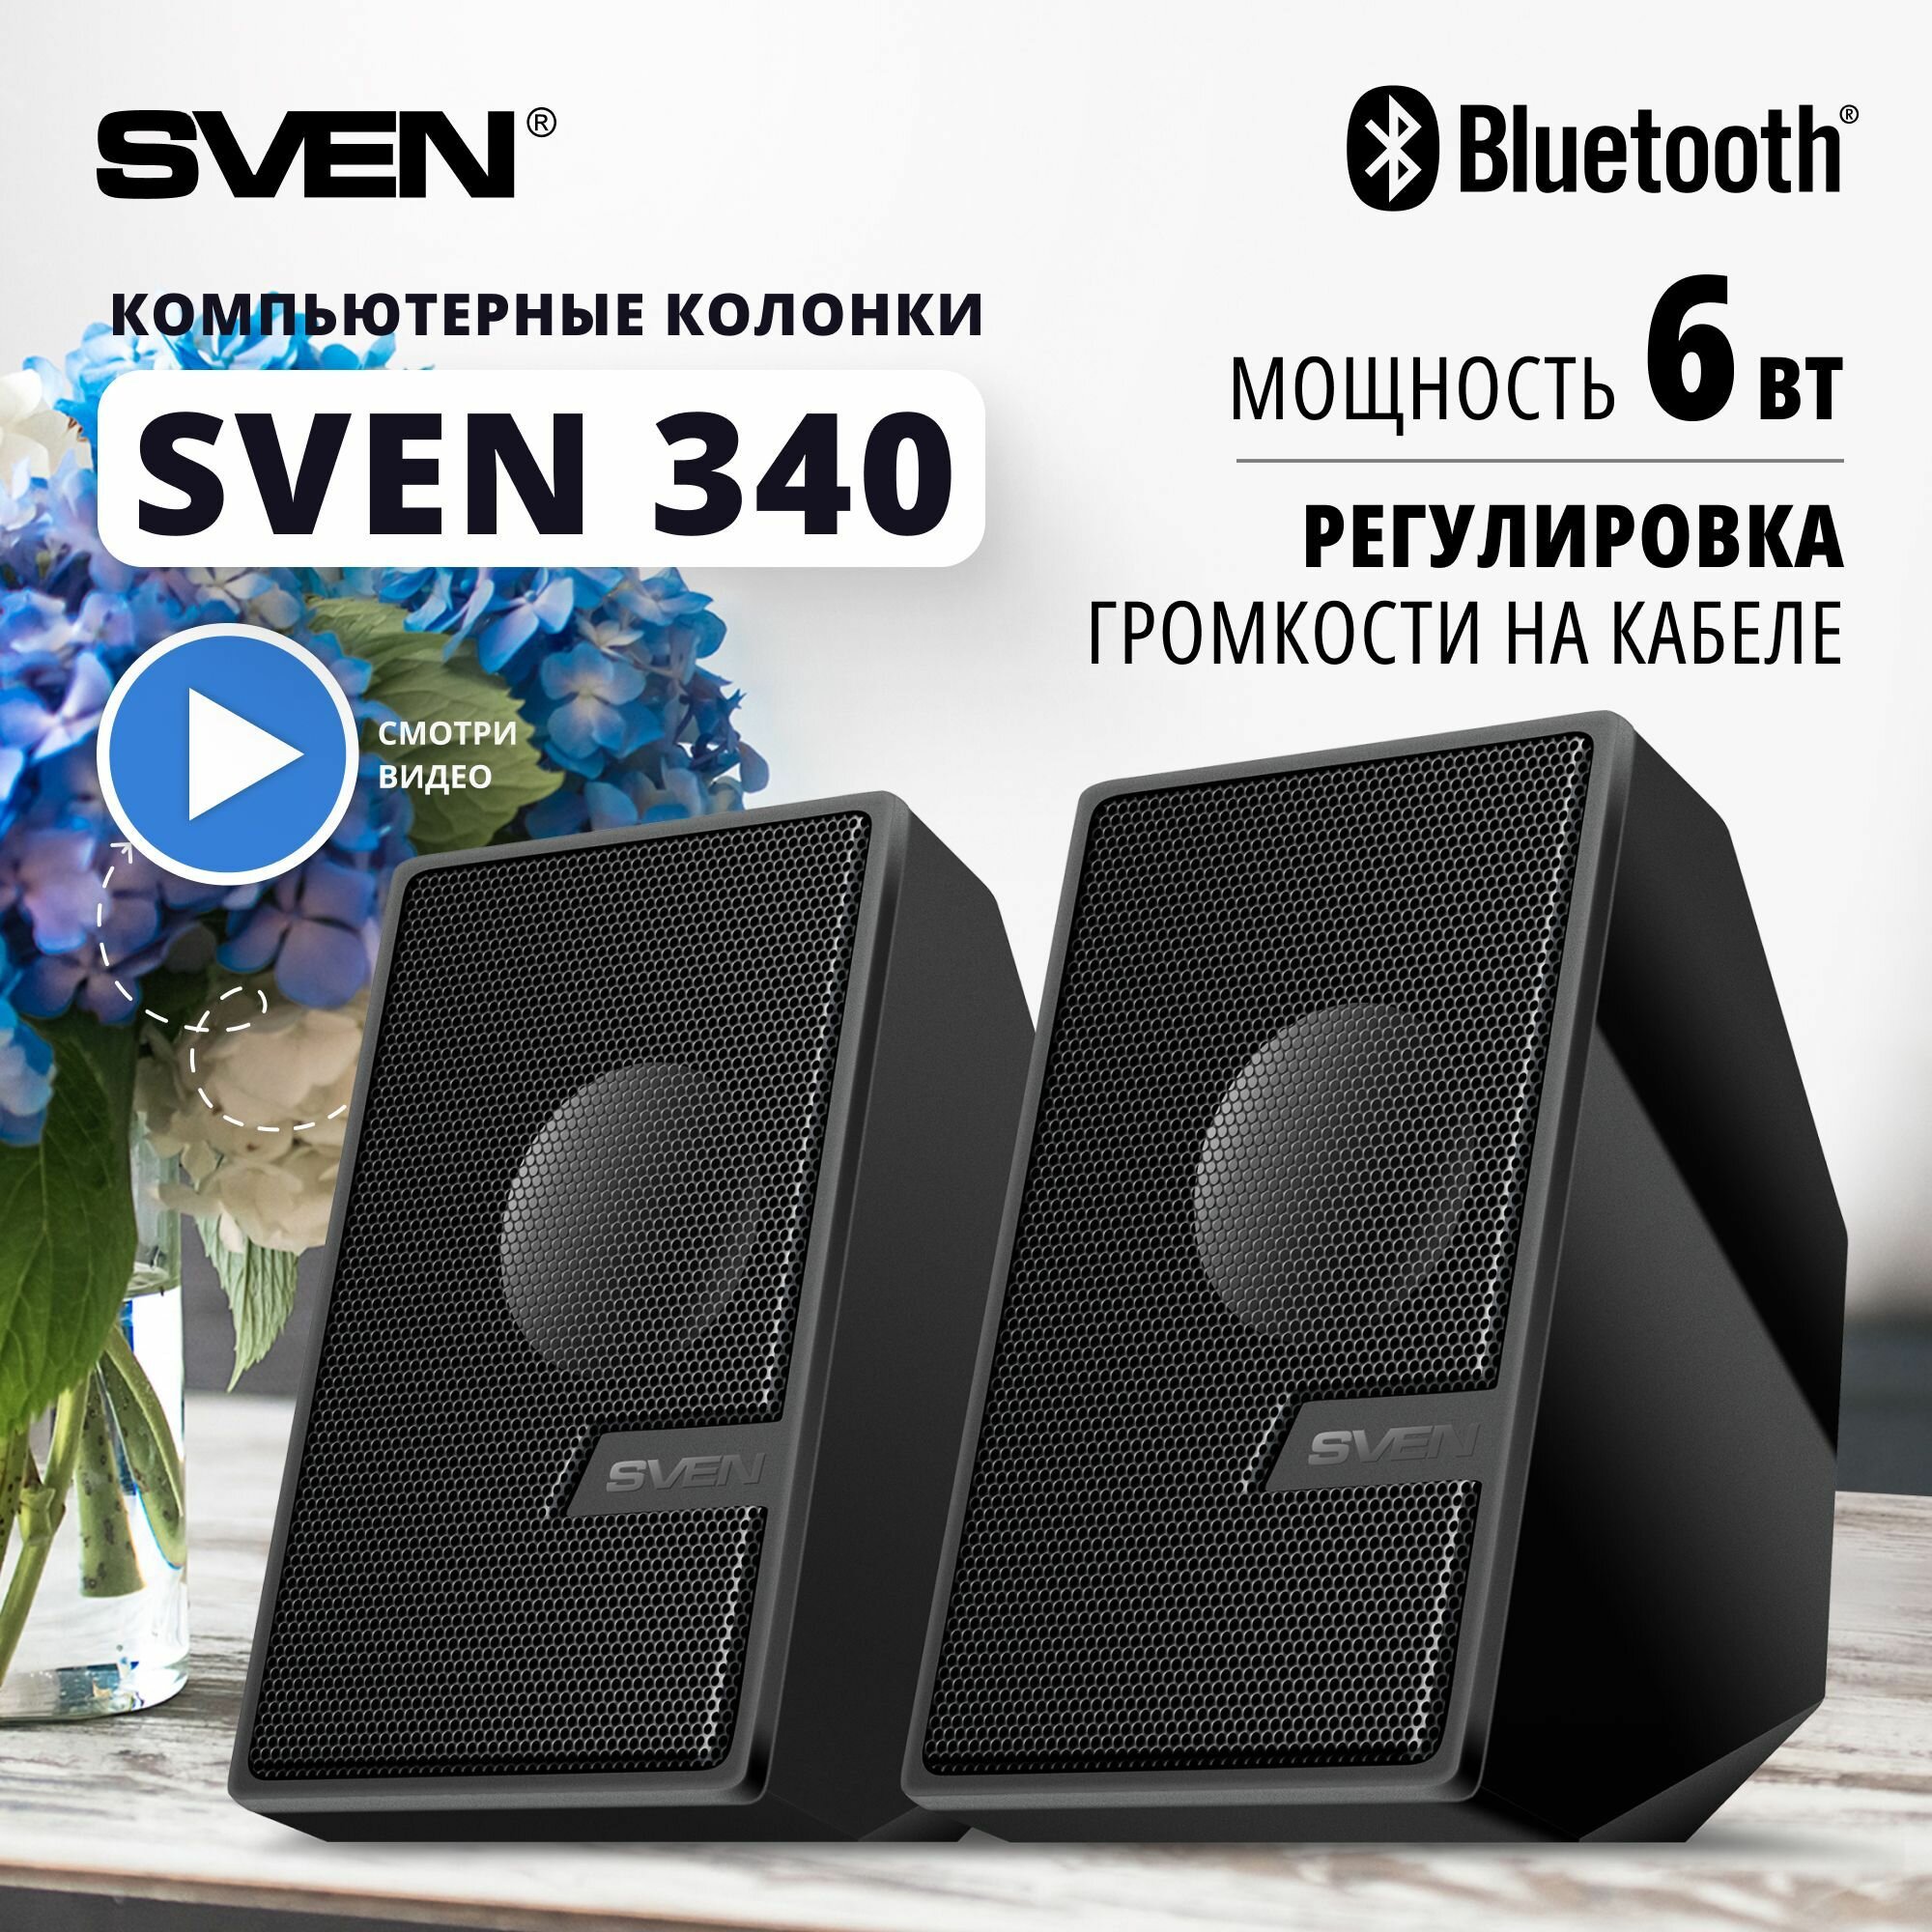 Компьютерная акустика 2.0 Sven черная (6 Вт, питание USB, BT) - фото №1